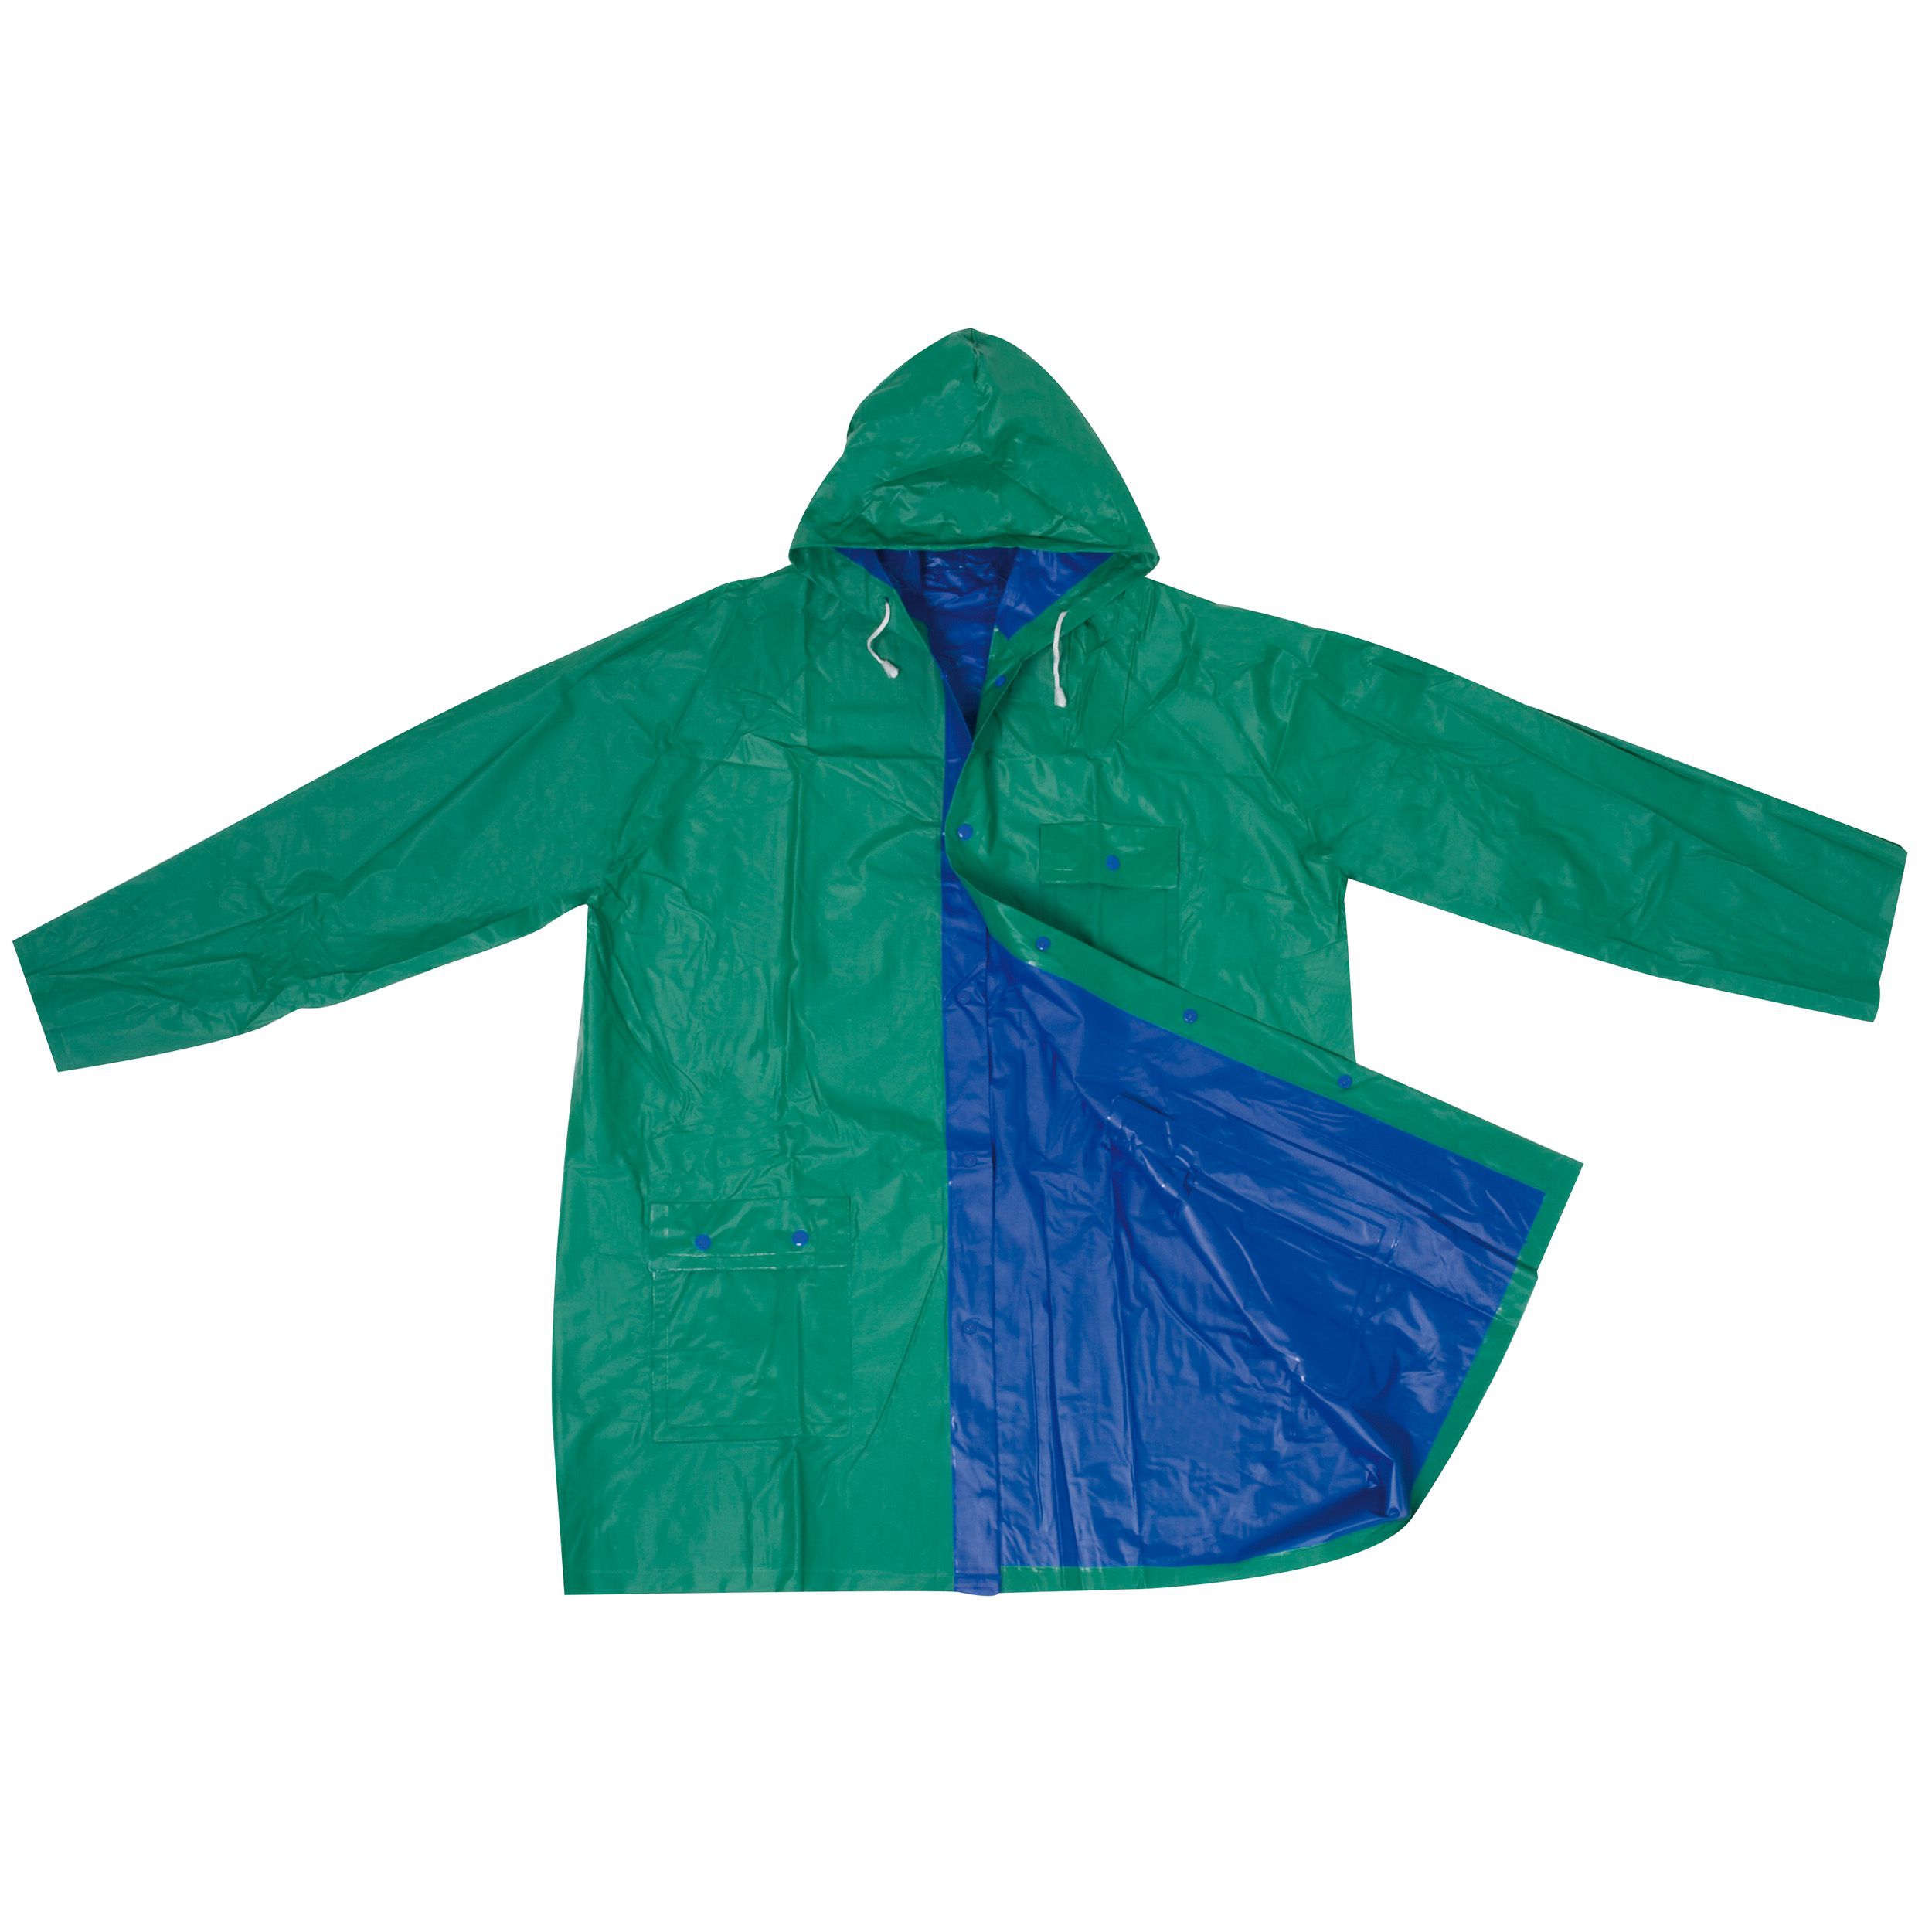 Zweifarbige phthalatfreie Wende Regenjacke aus PVC, blau/grün